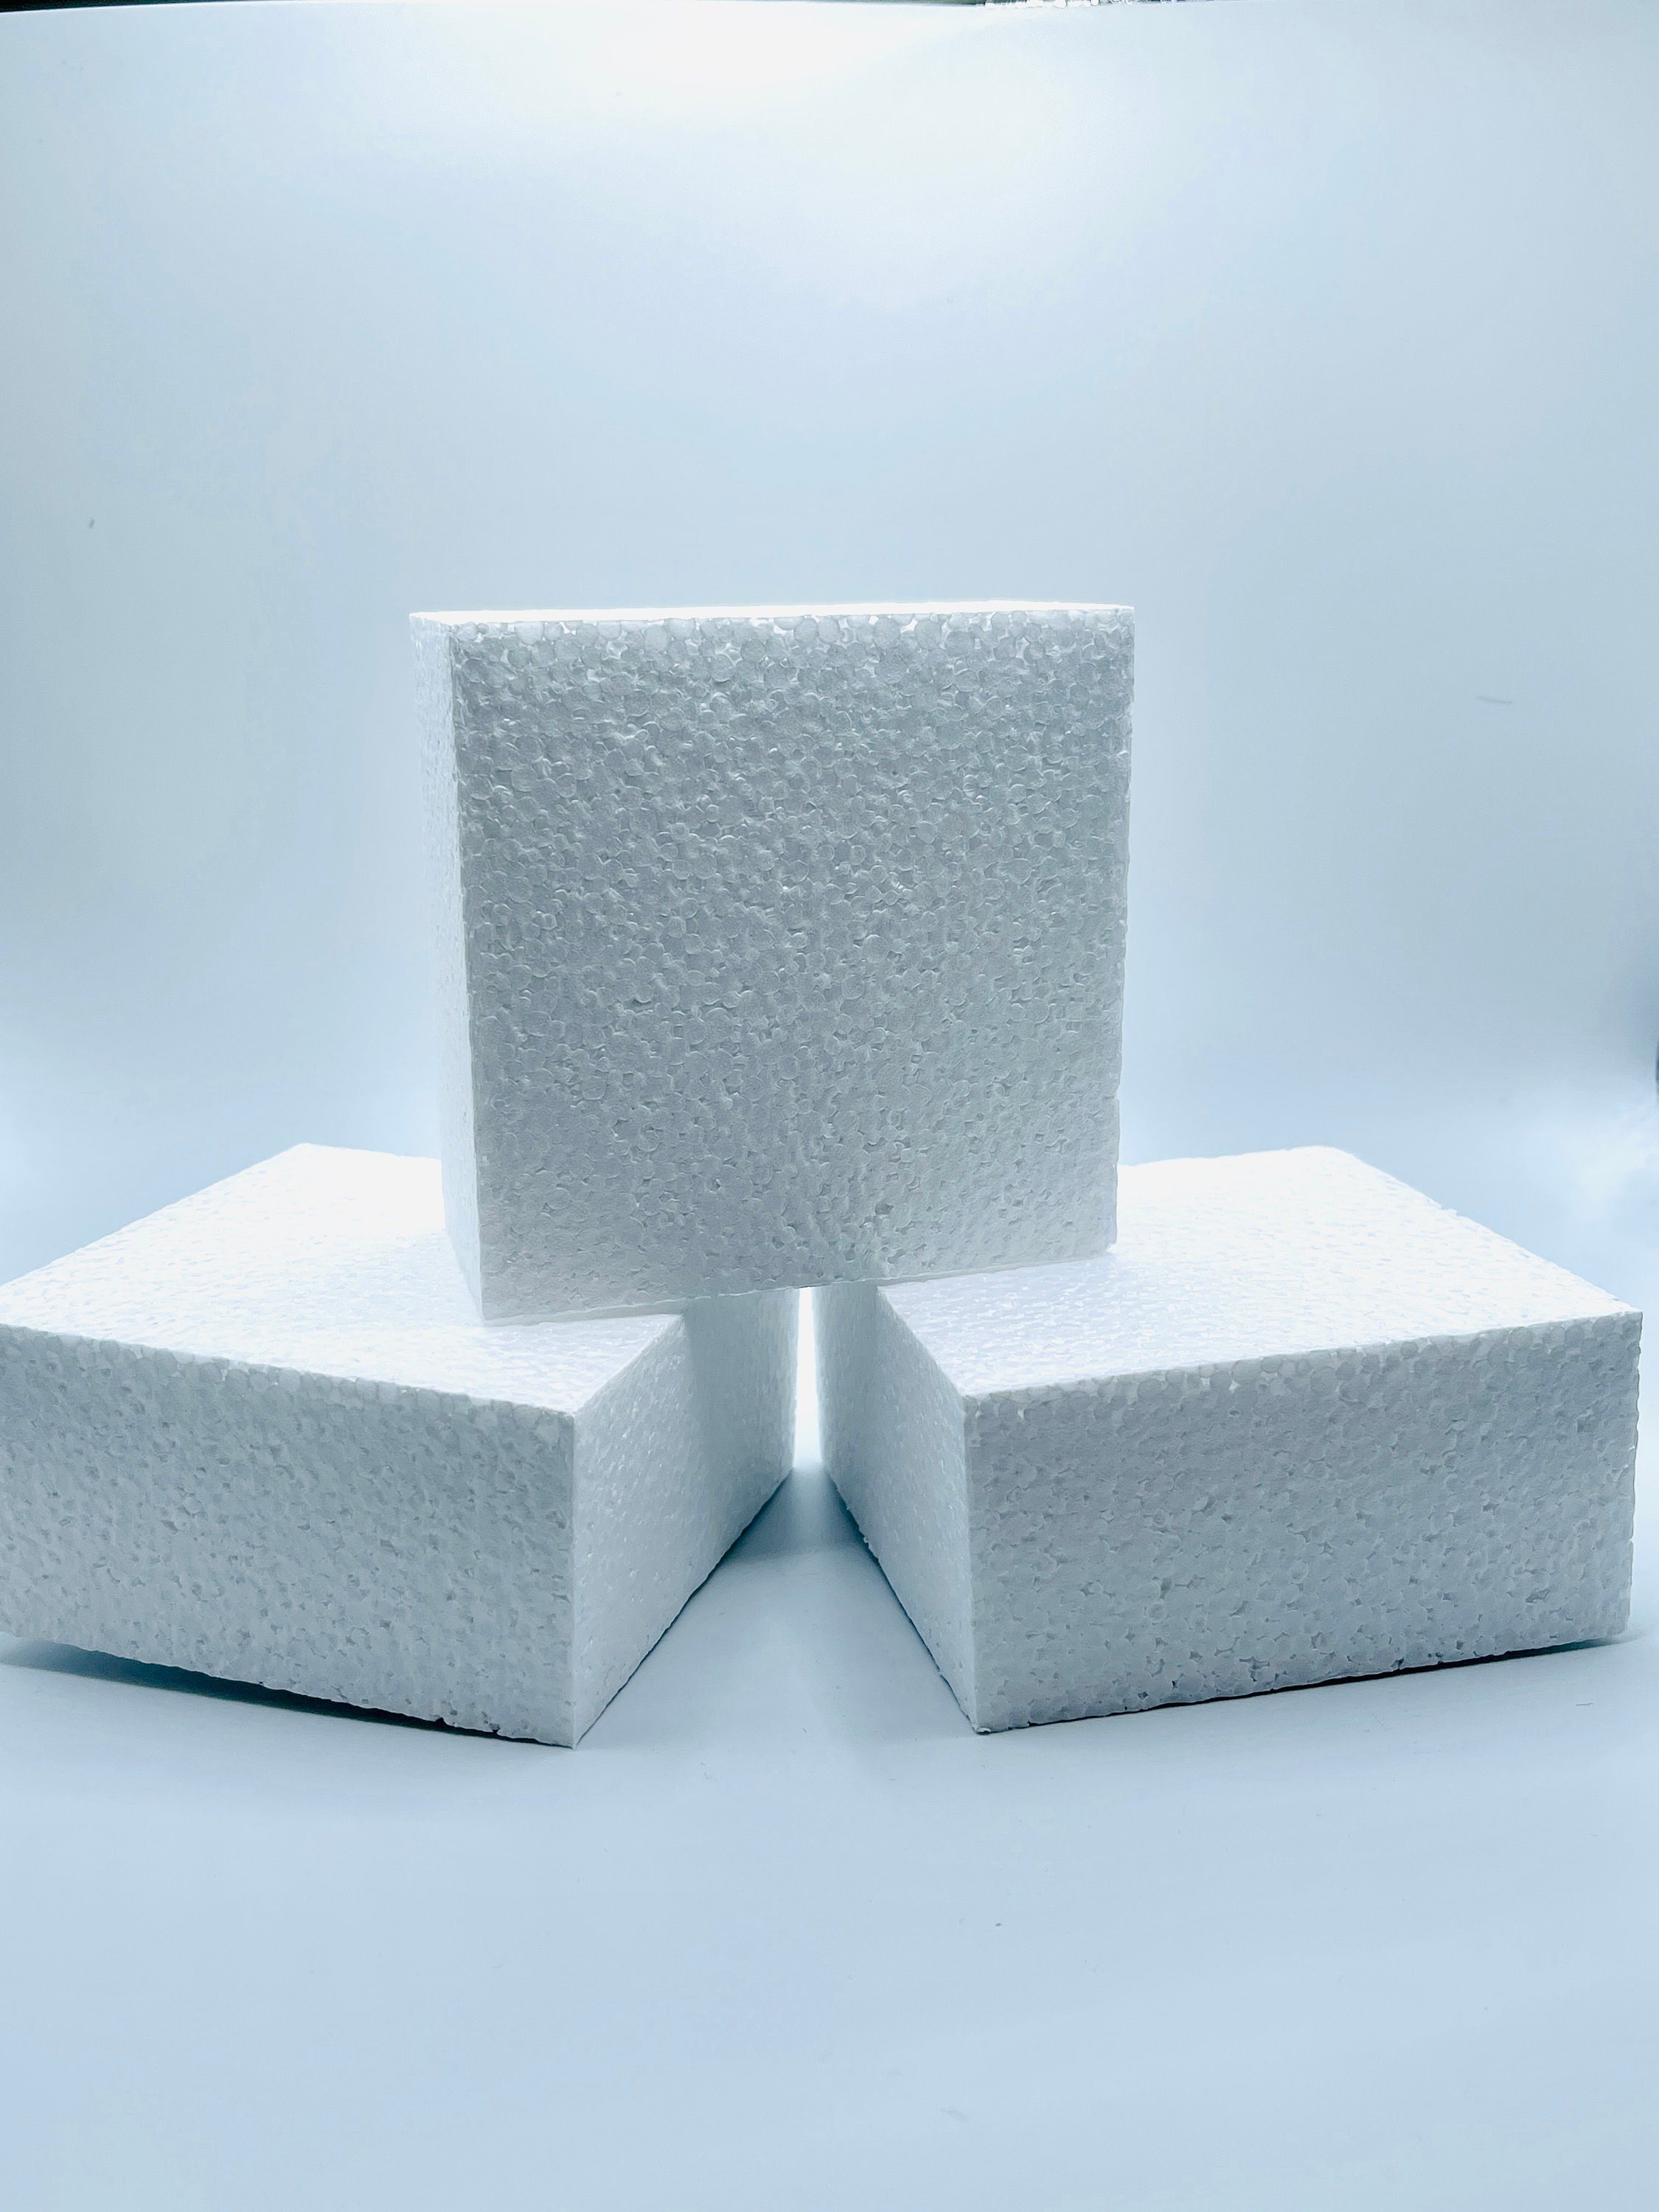 9 X 6.5 X 3 Lot / 4 Polystyrene / Styrofoam Blocks Crafts Art Project DIY  Bricks